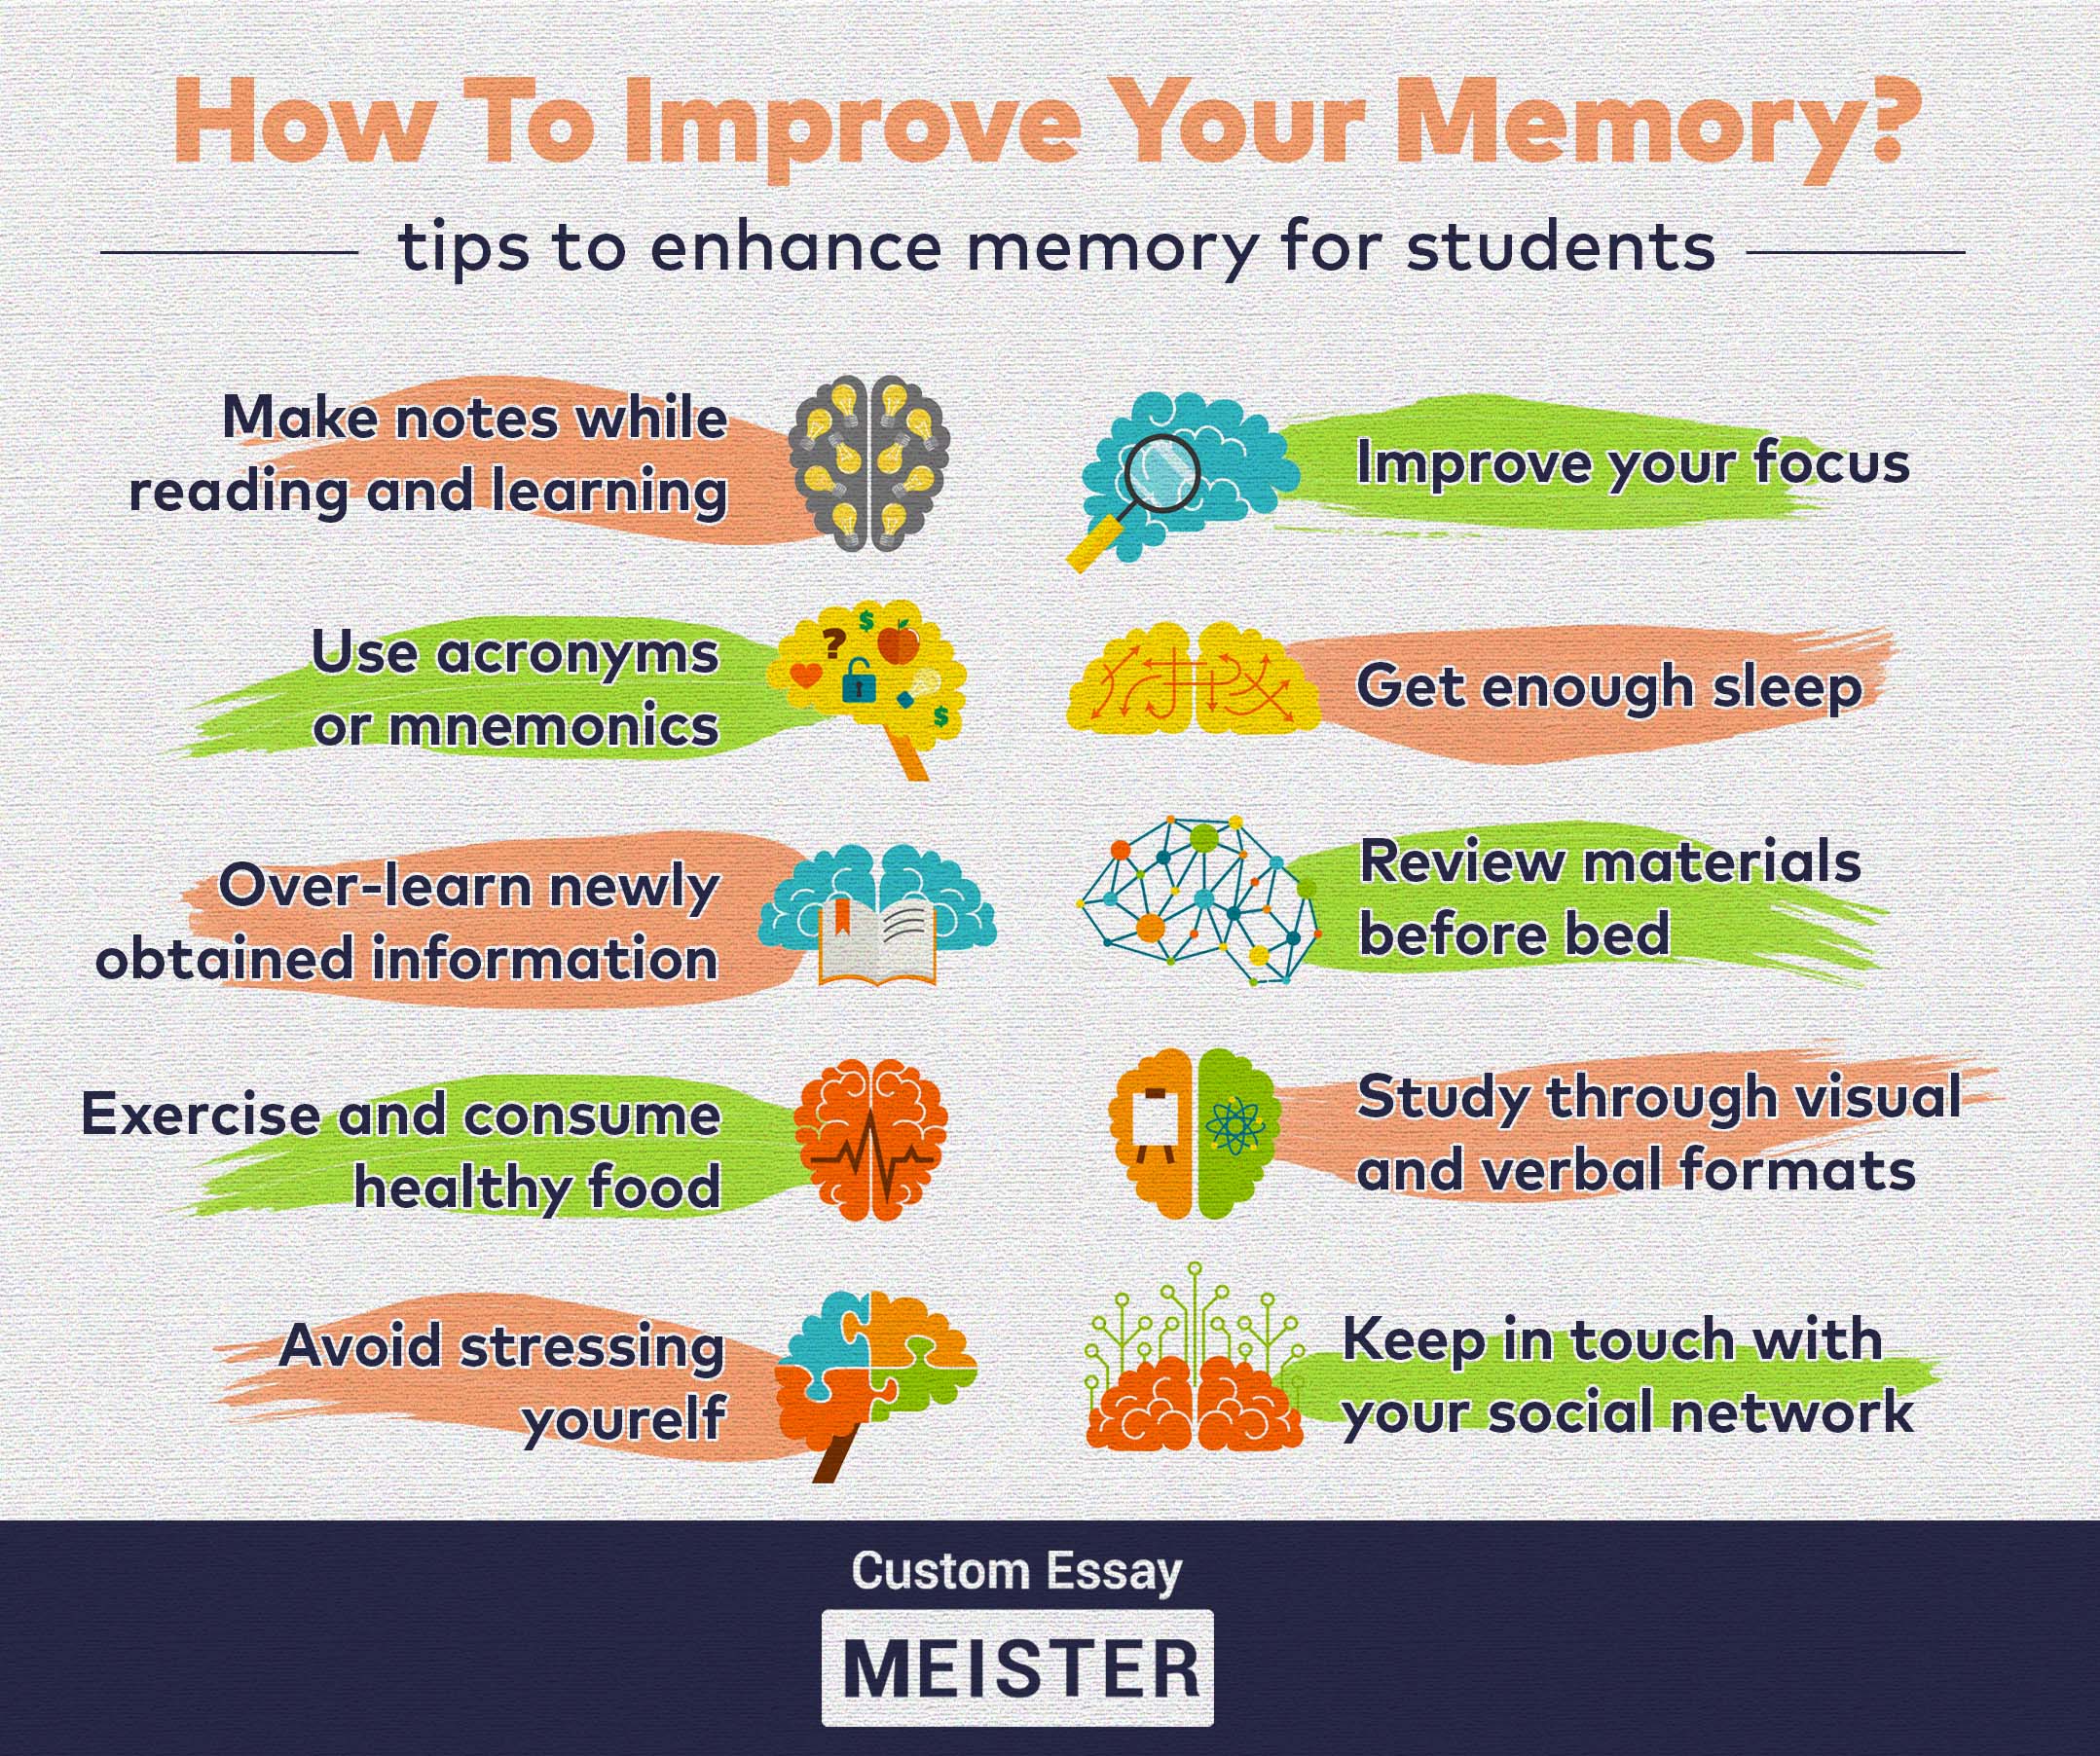 does homework help memory